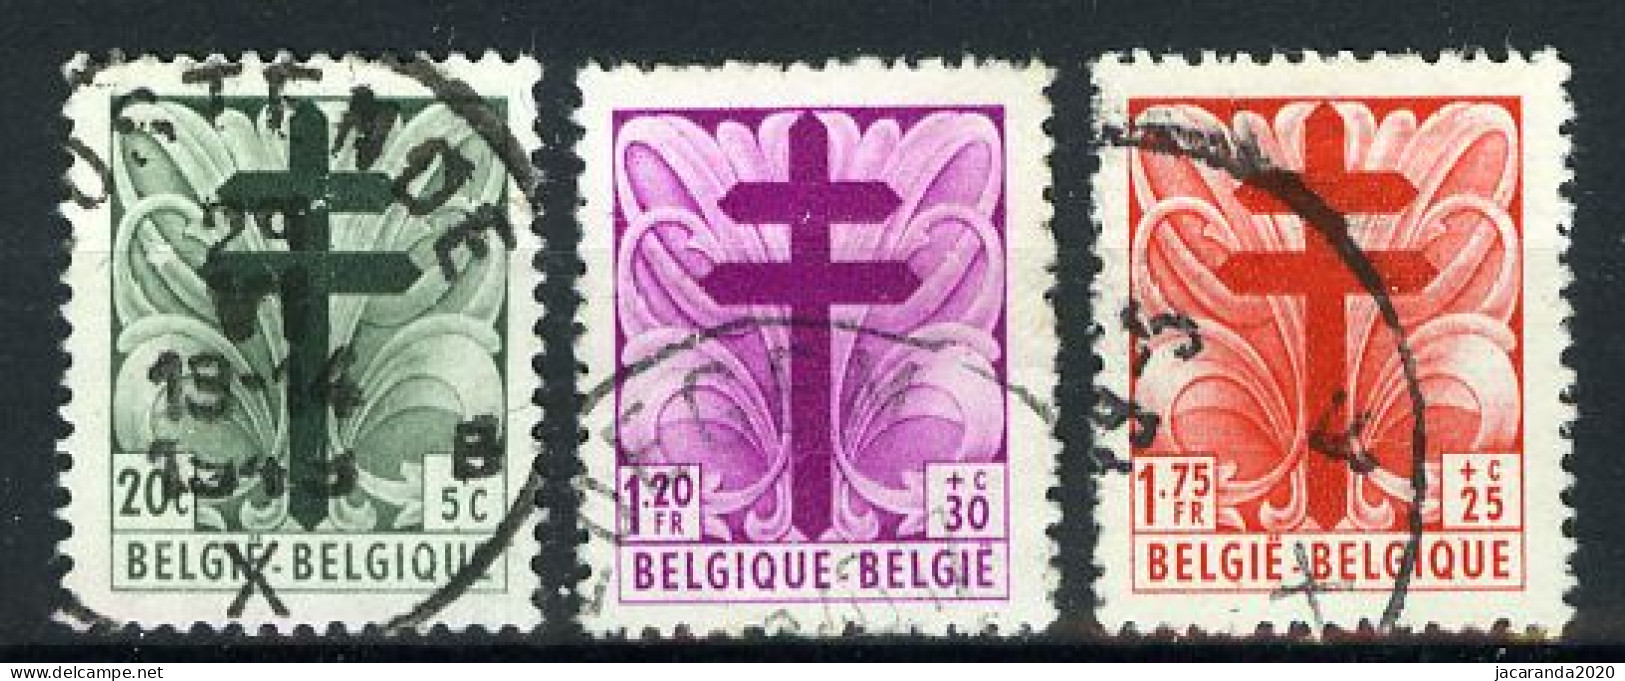 België 787/89 - Antitering - Kruis Van Lotharingen - Portretten Van De Senaat III - Gestempeld - Oblitéré - Used - Oblitérés